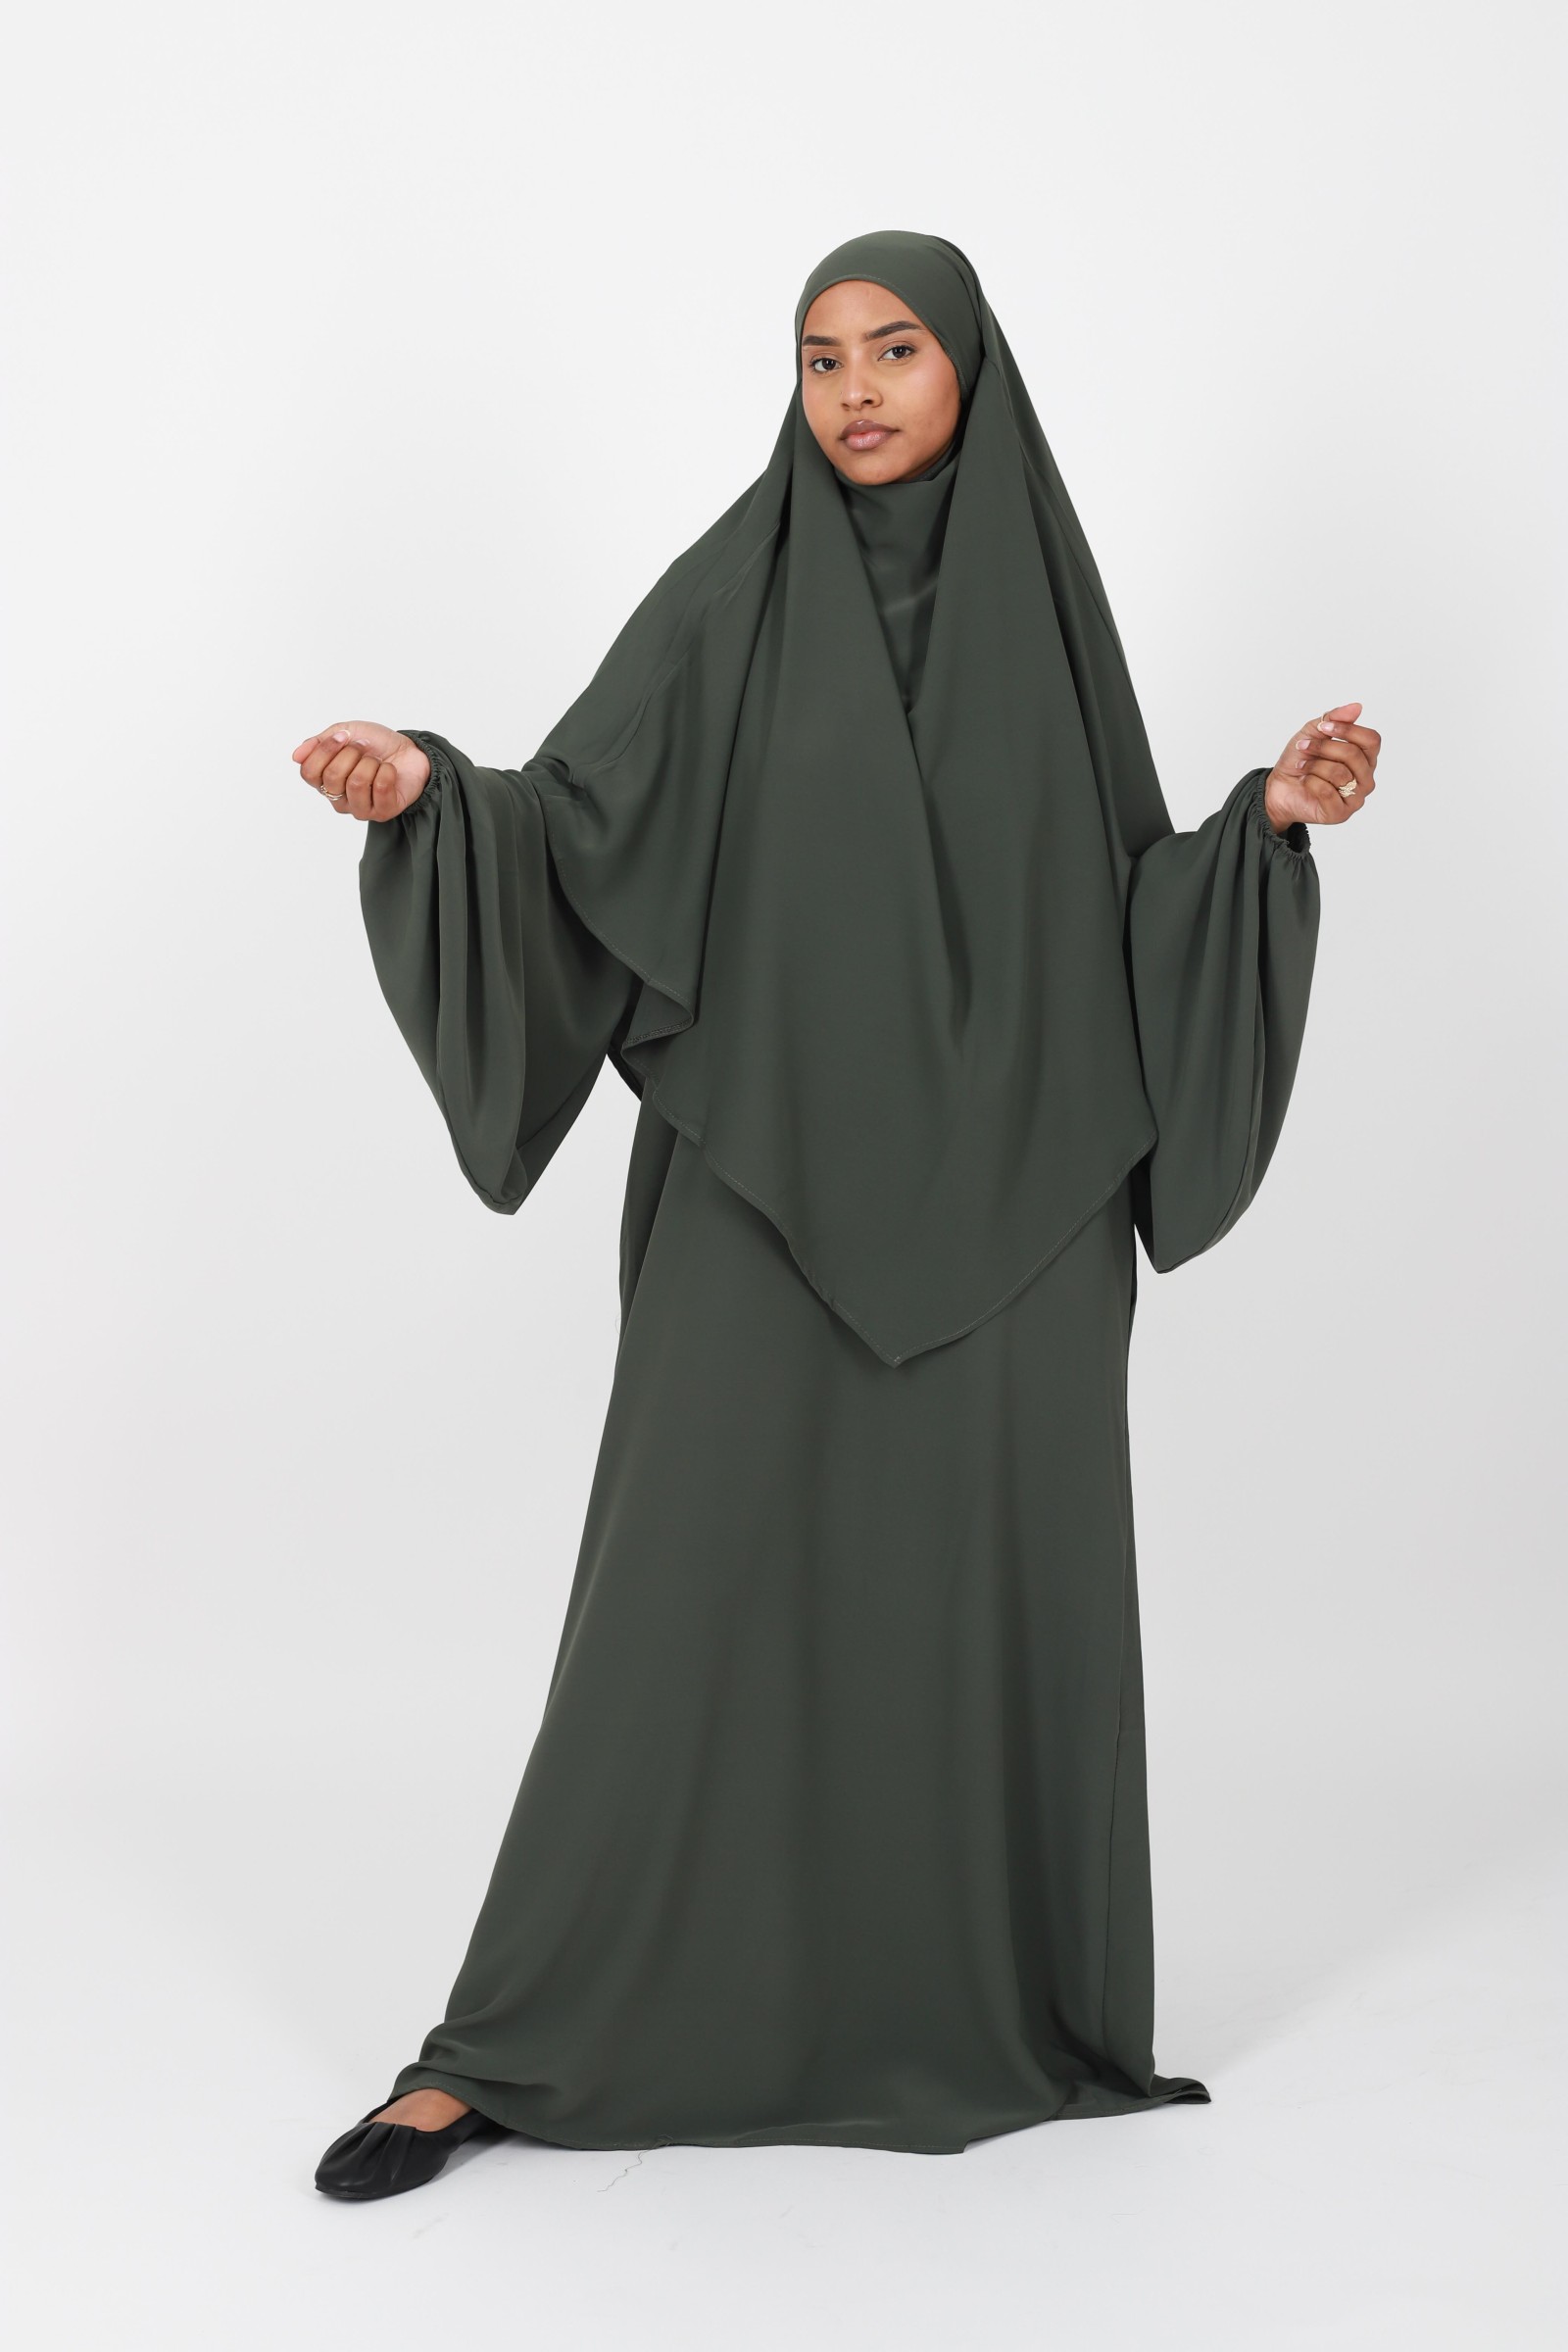 Muslim Women Overhead Prayer Dress One piece Jilbab Hijab Islamic garment  Khima | eBay